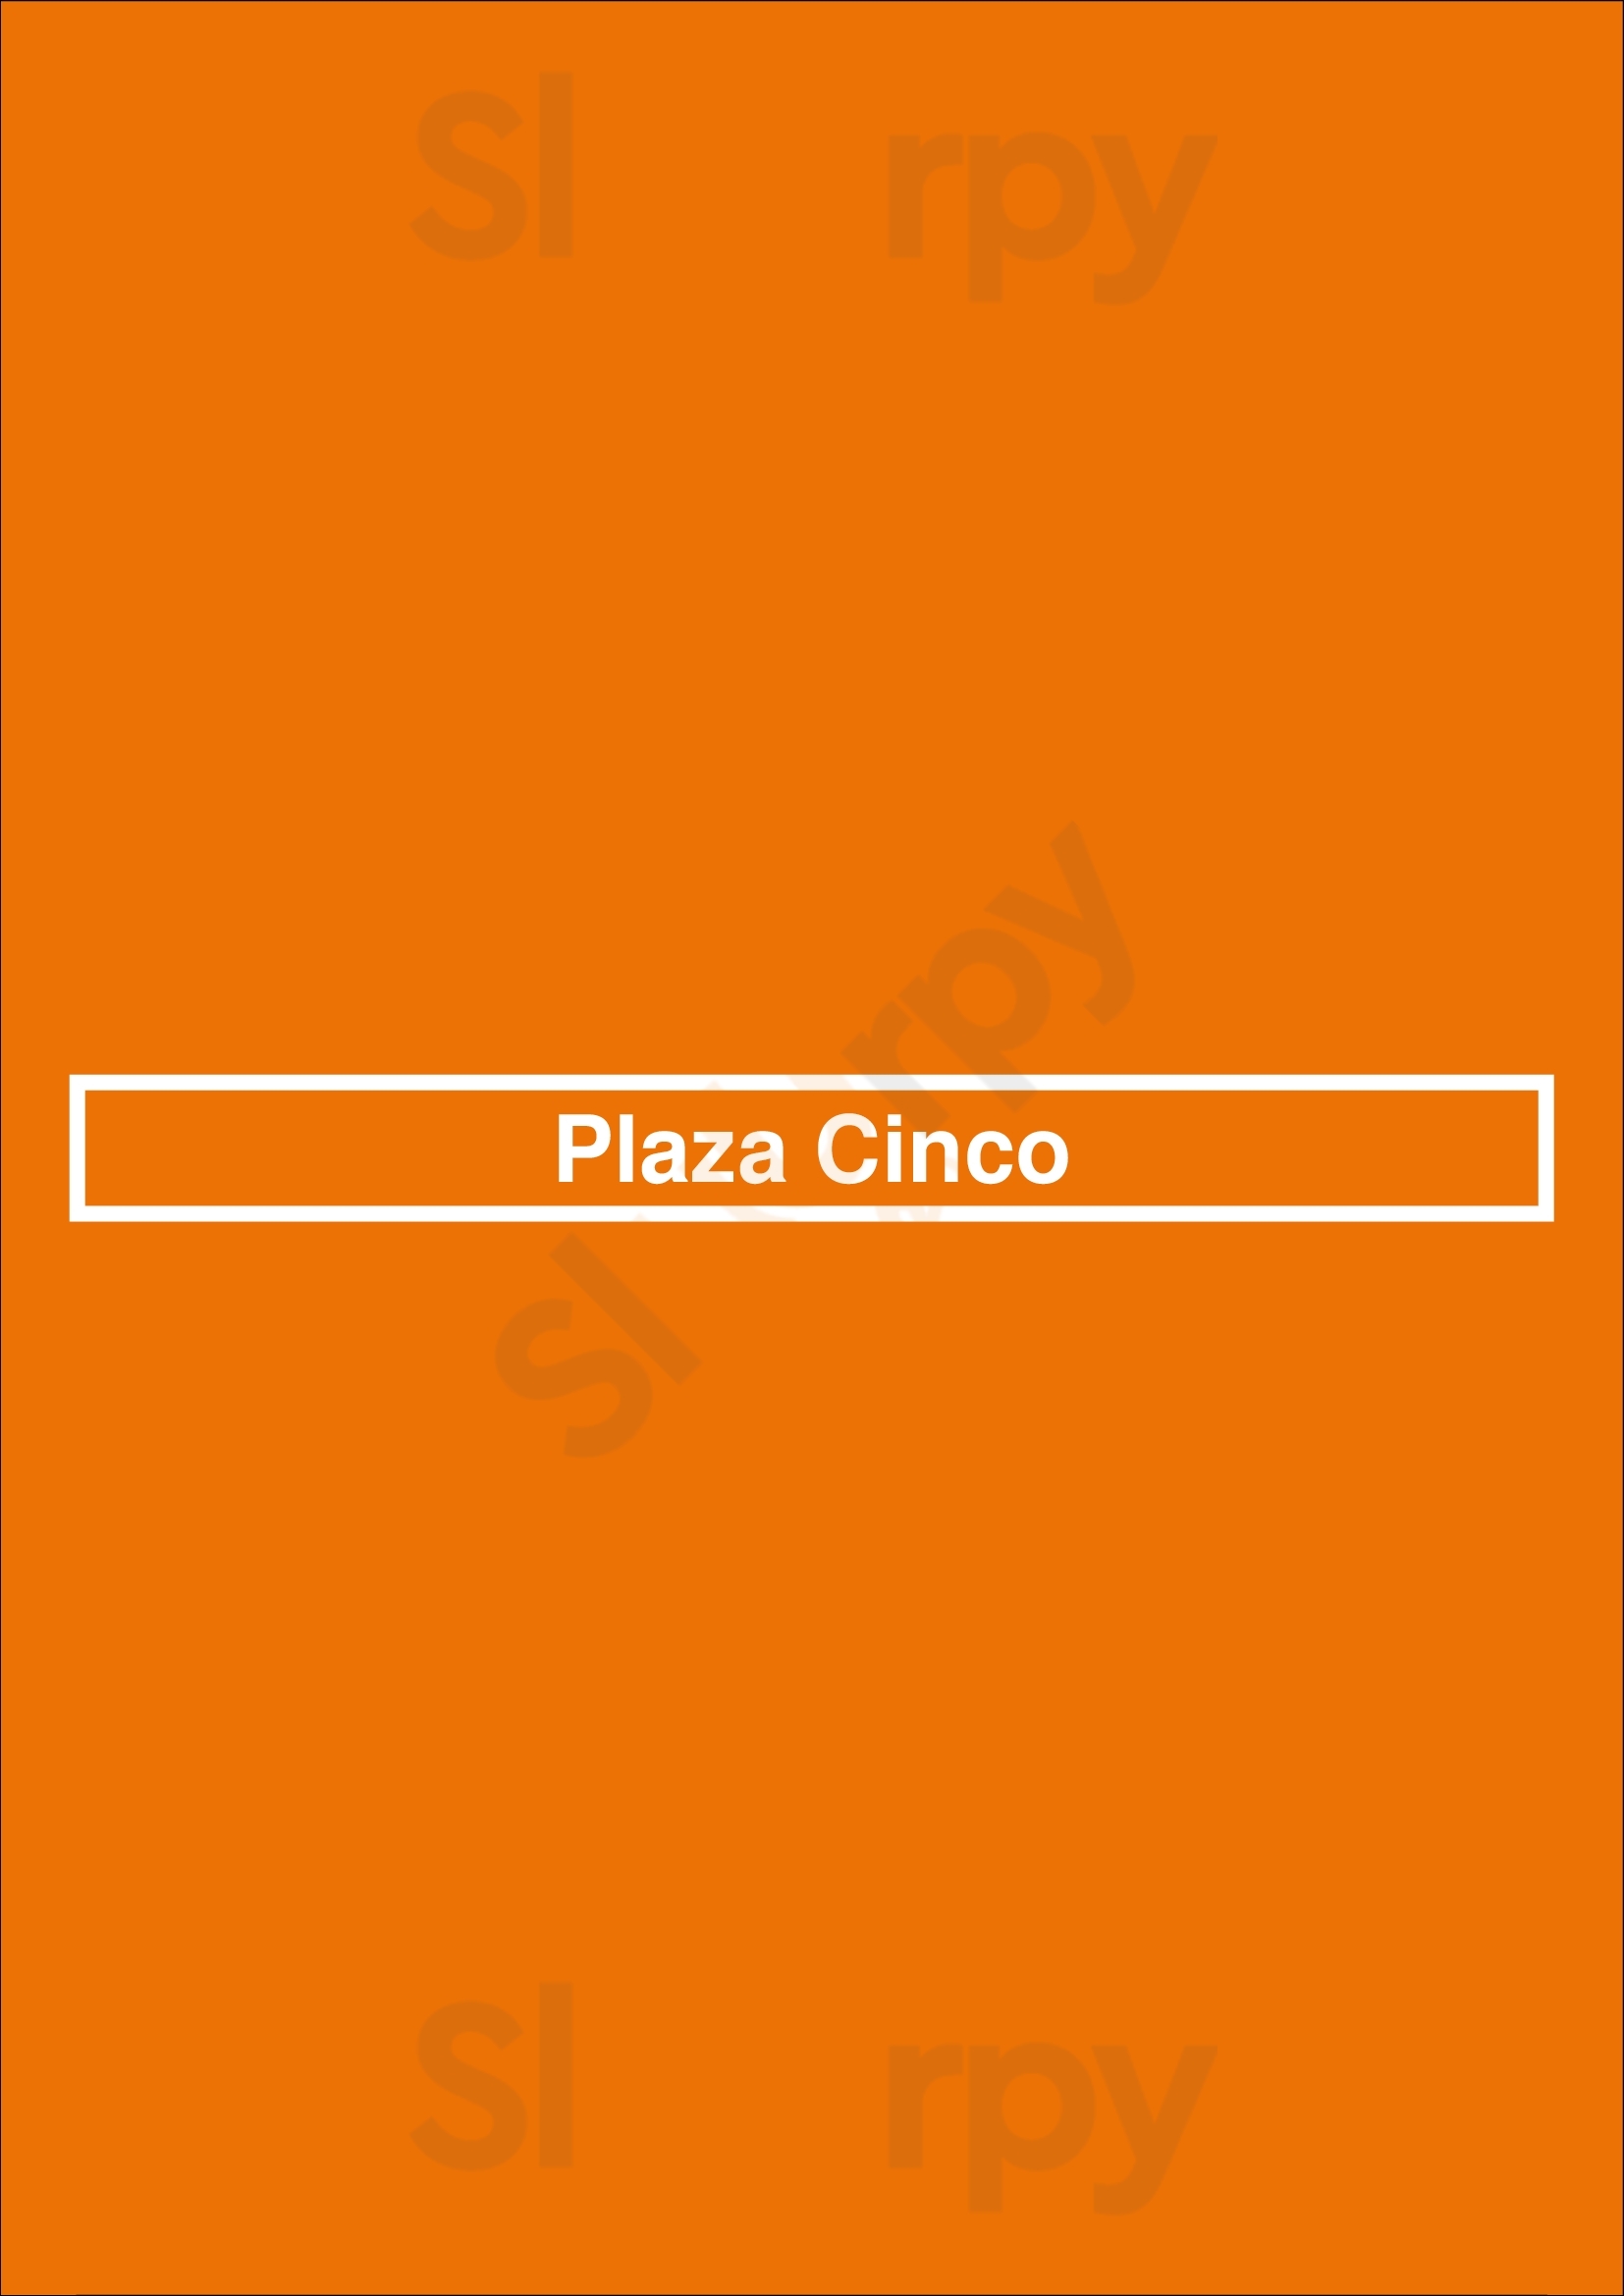 Plaza Cinco Heiloo Menu - 1